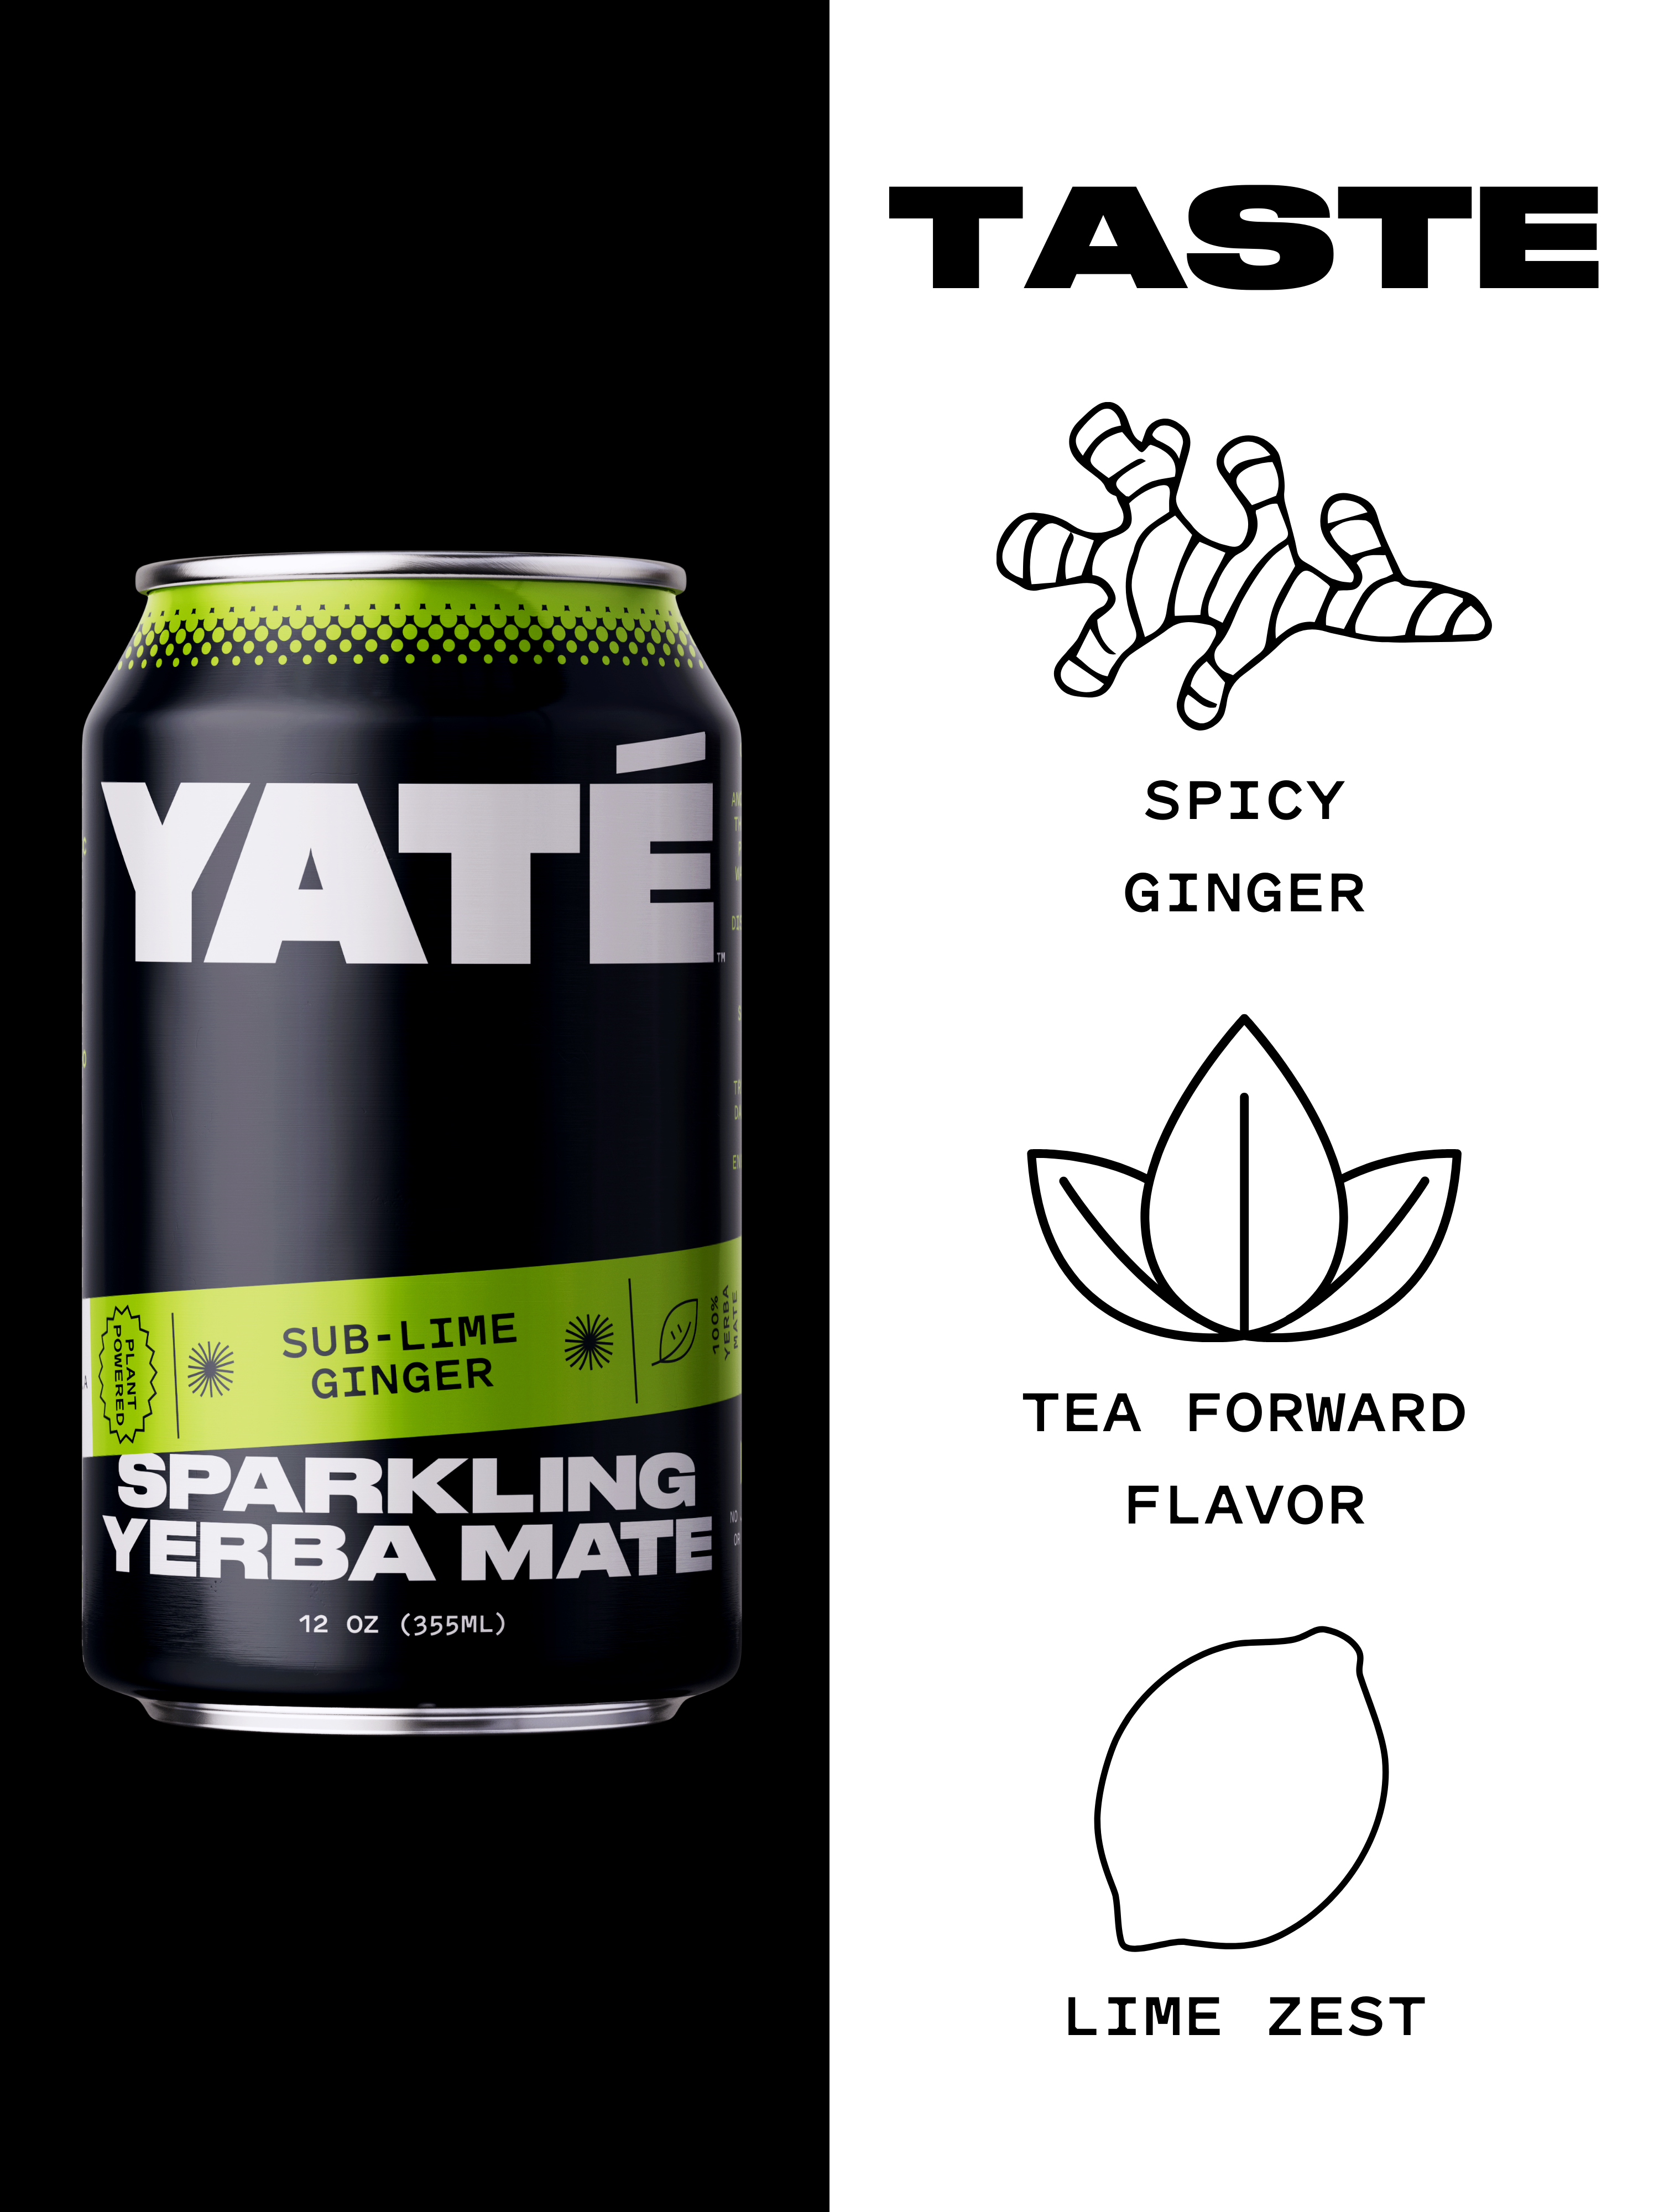 Yate Yerba Mate Sub-Lime Ginger Flavor 12oz Can Taste Profile